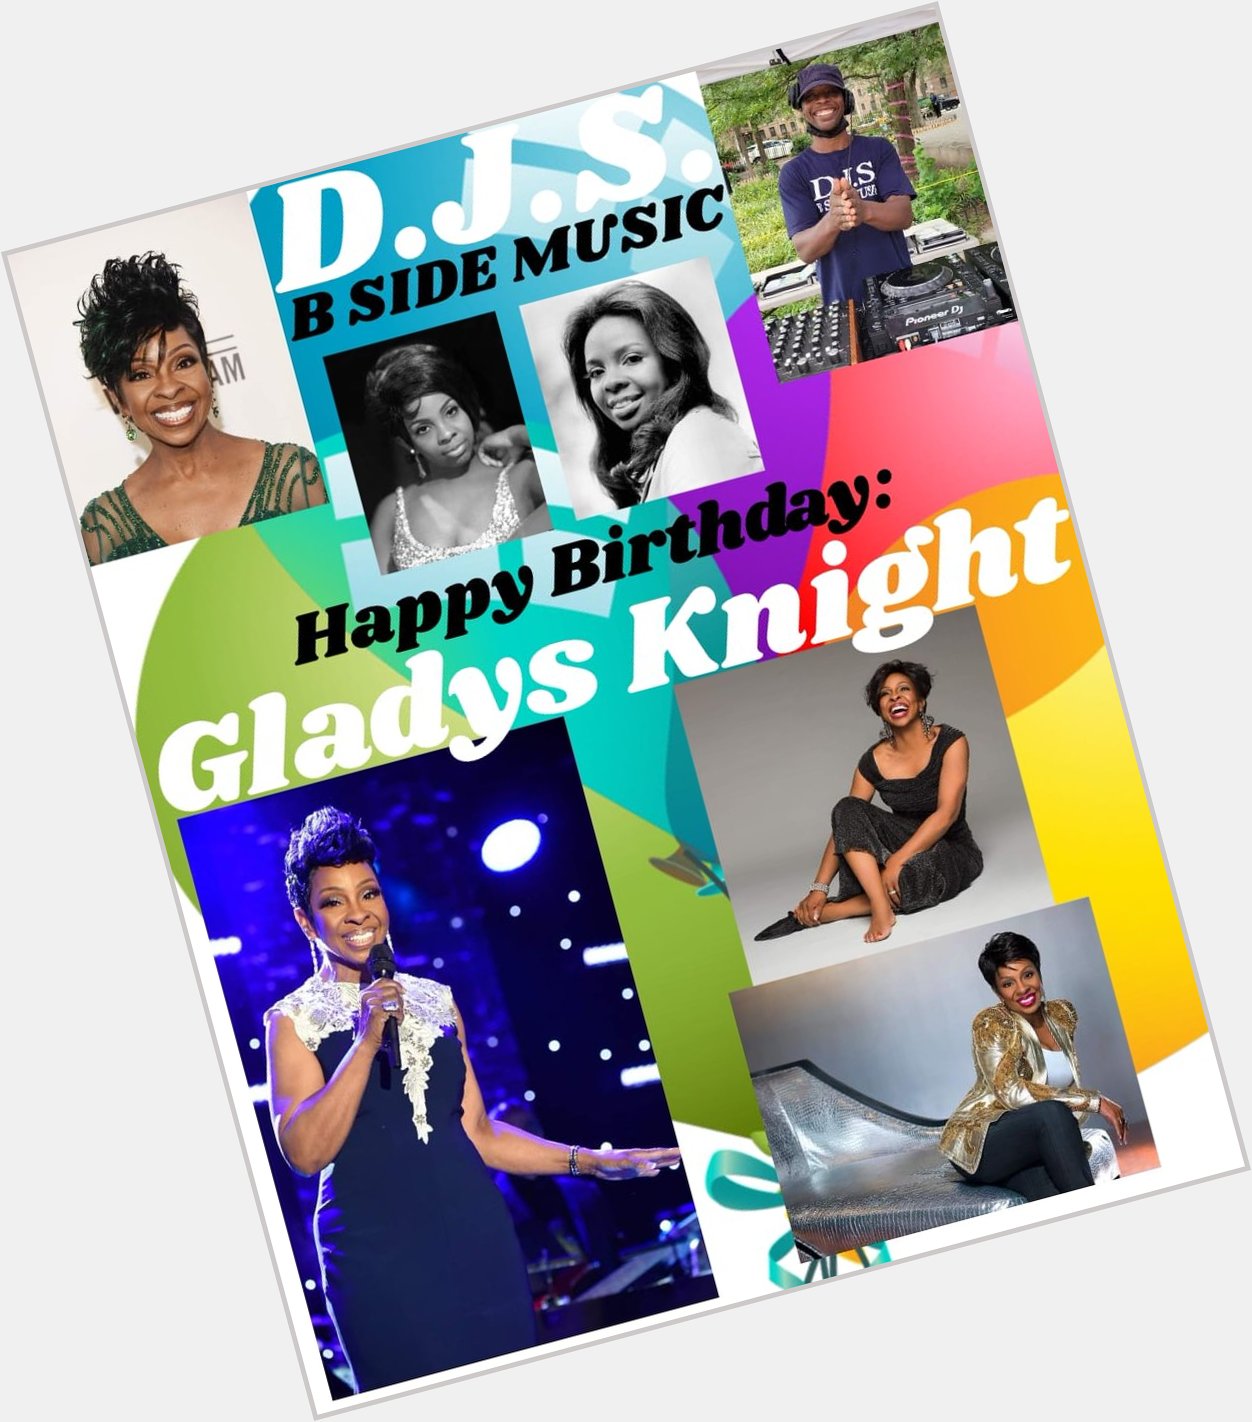 I(D.J.S.) wish Singer/Songwriter/Actress/Businesswoman: \"GLADYS KNIGHT\" Happy Birthday!!! 